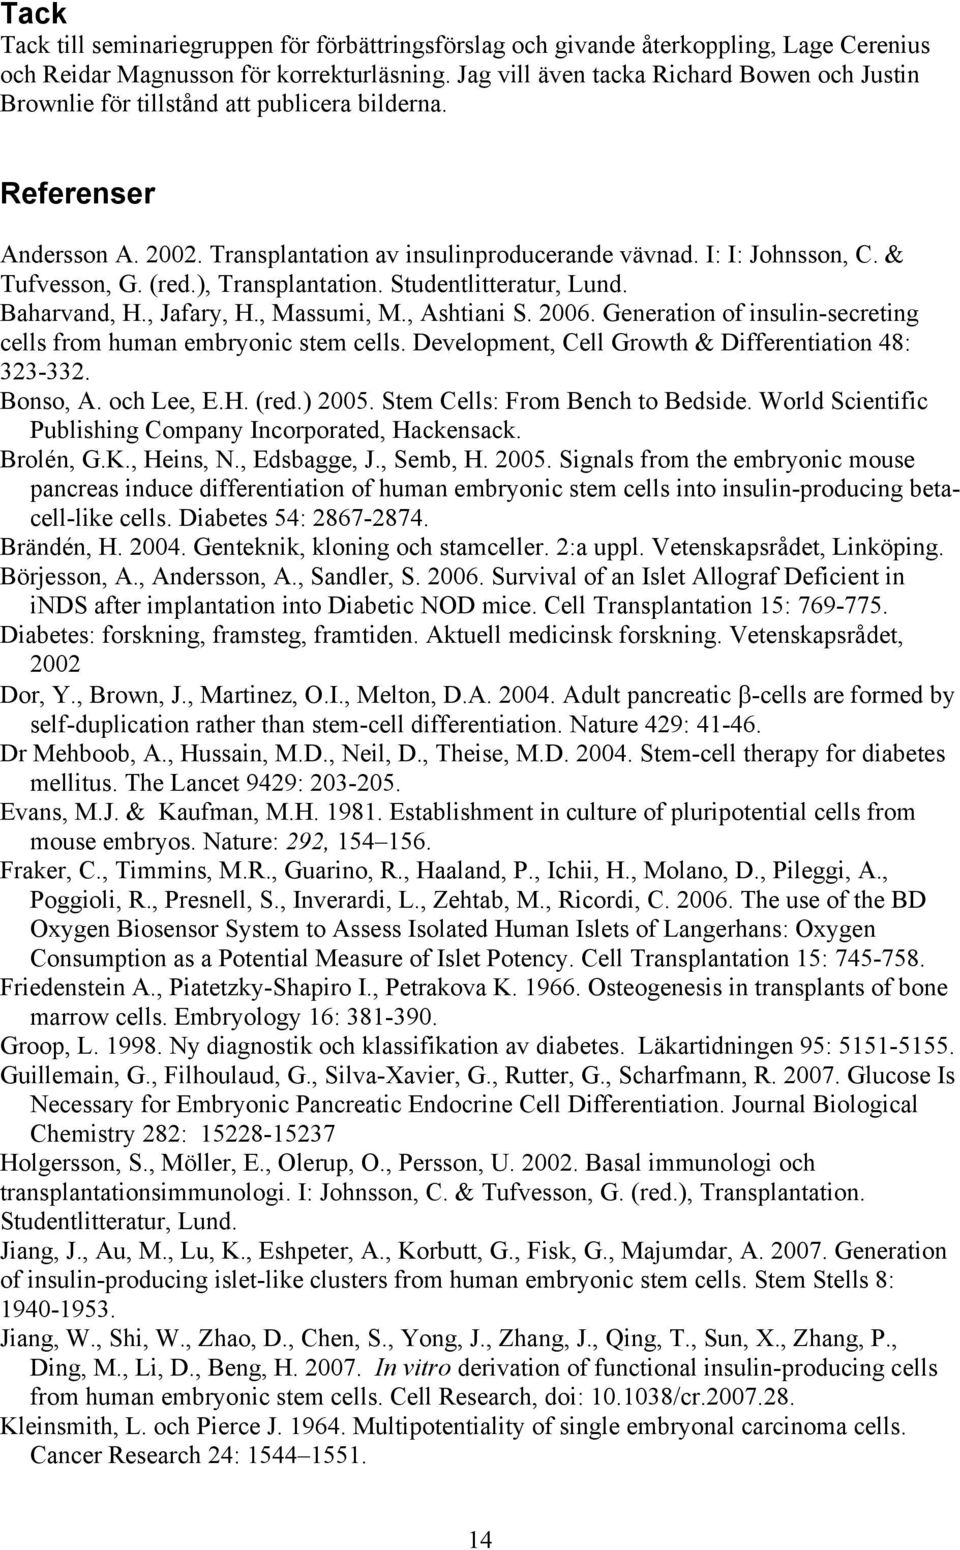 & Tufvesson, G. (red.), Transplantation. Studentlitteratur, Lund. Baharvand, H., Jafary, H., Massumi, M., Ashtiani S. 2006. Generation of insulin-secreting cells from human embryonic stem cells.